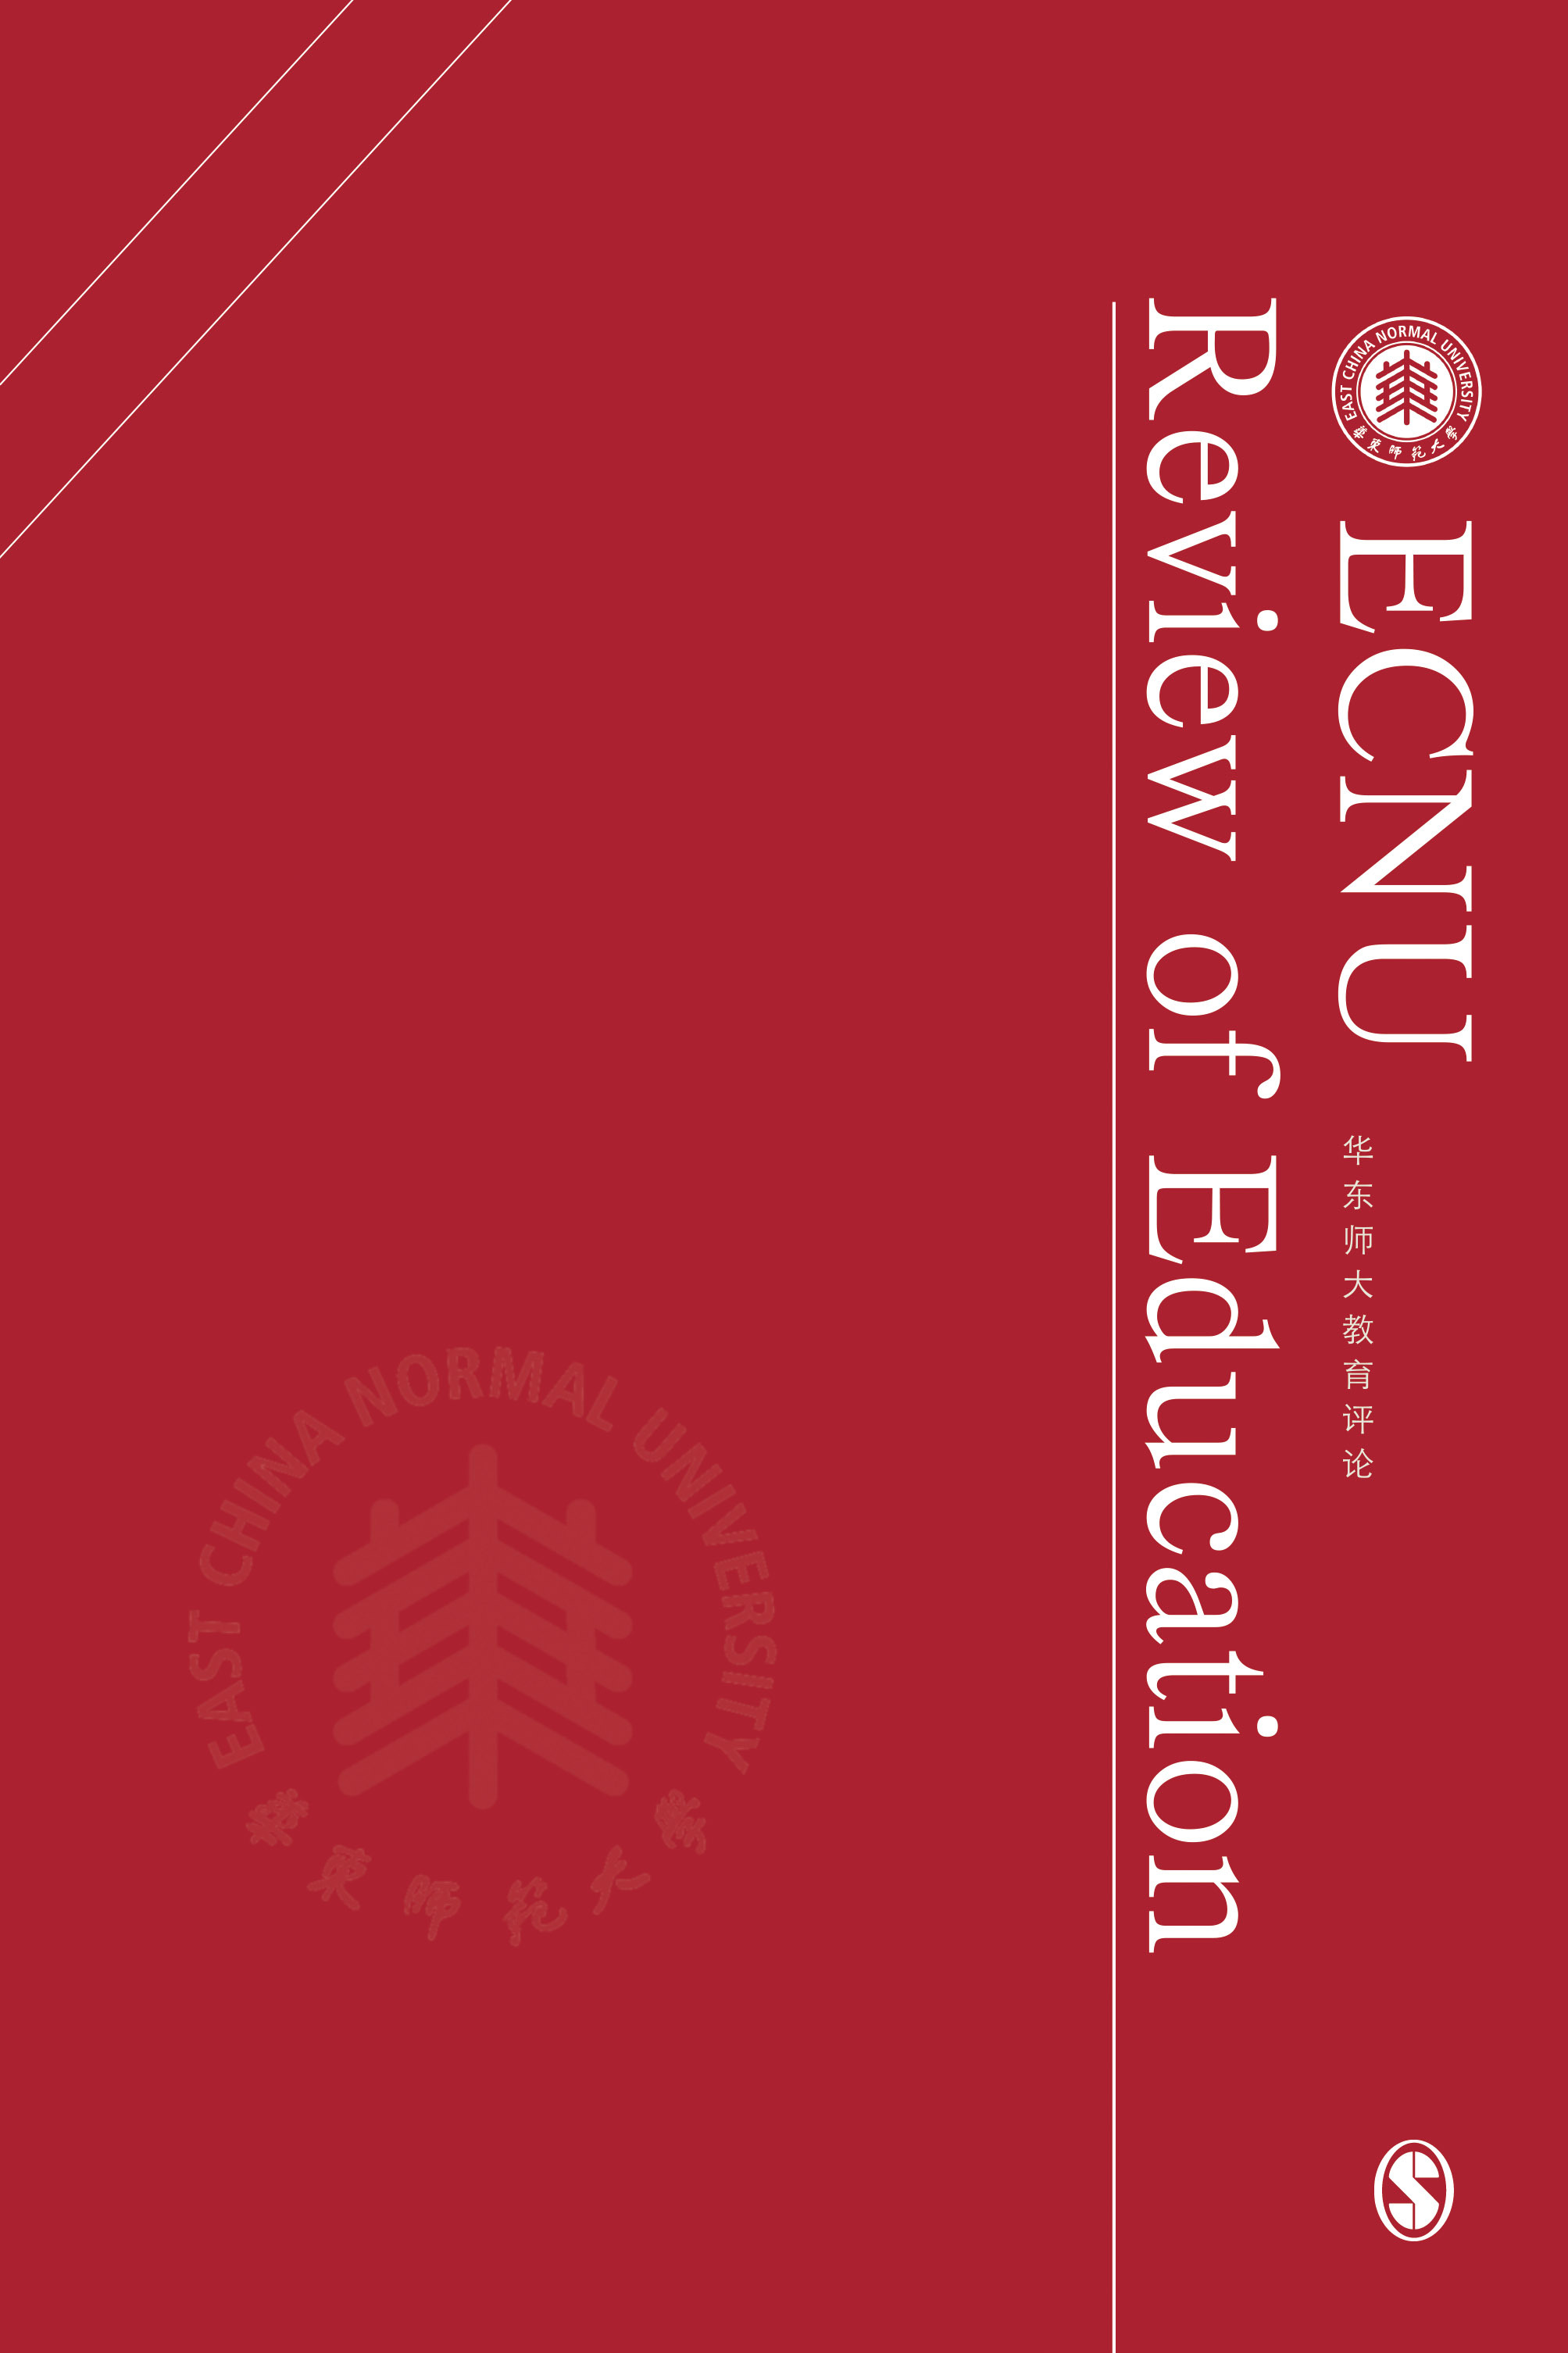  ECNU Review of Education